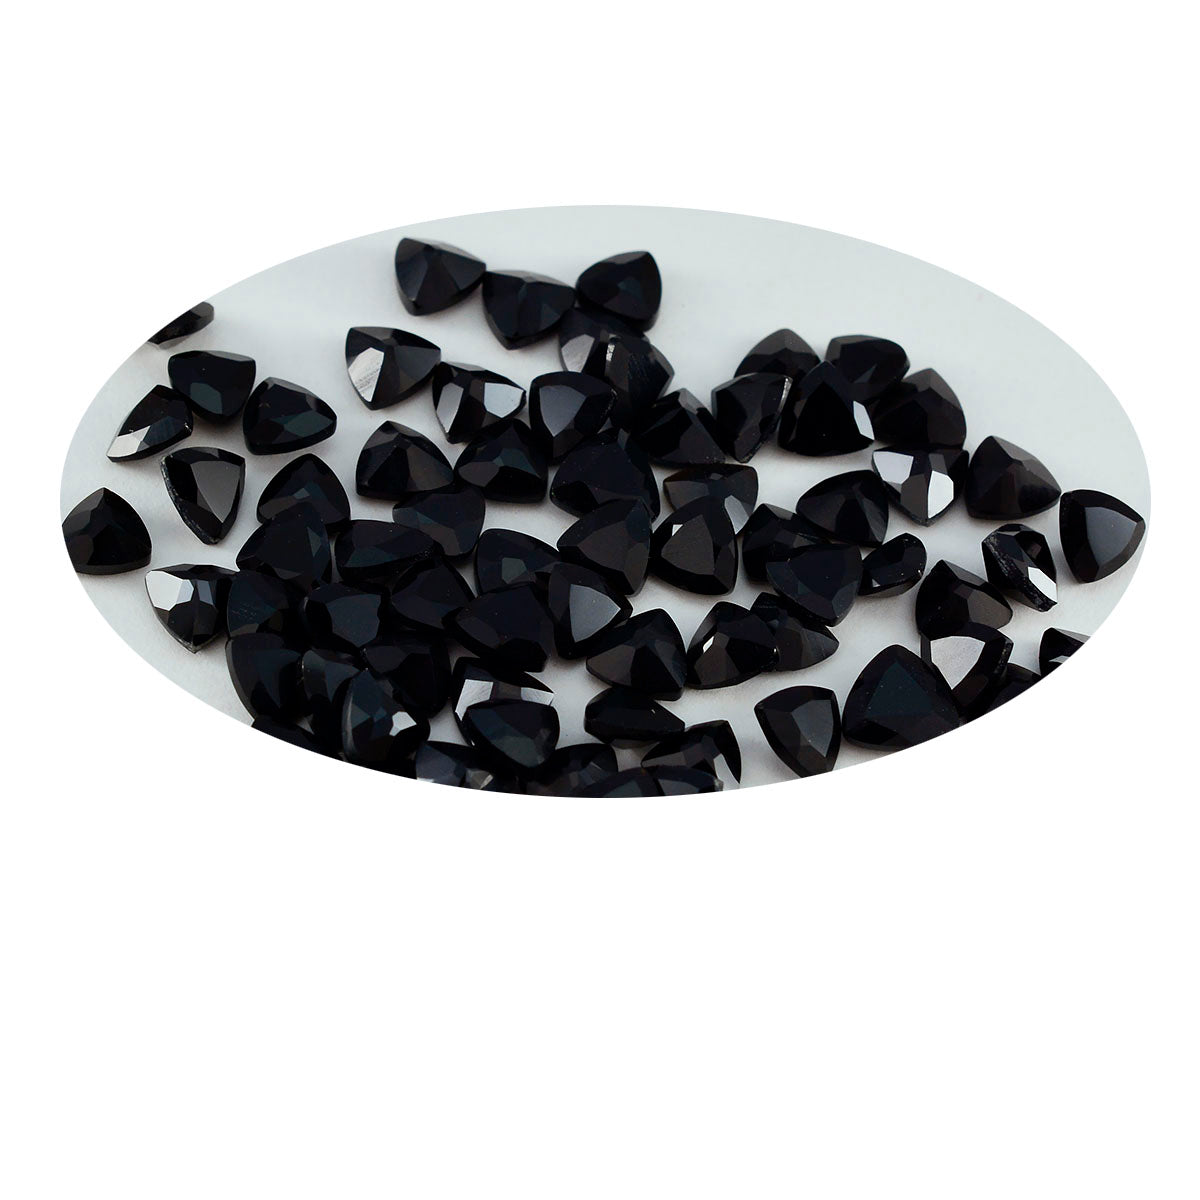 Riyogems 1PC Natural Black Onyx Faceted 4x4 mm Trillion Shape A+ Quality Loose Gemstone